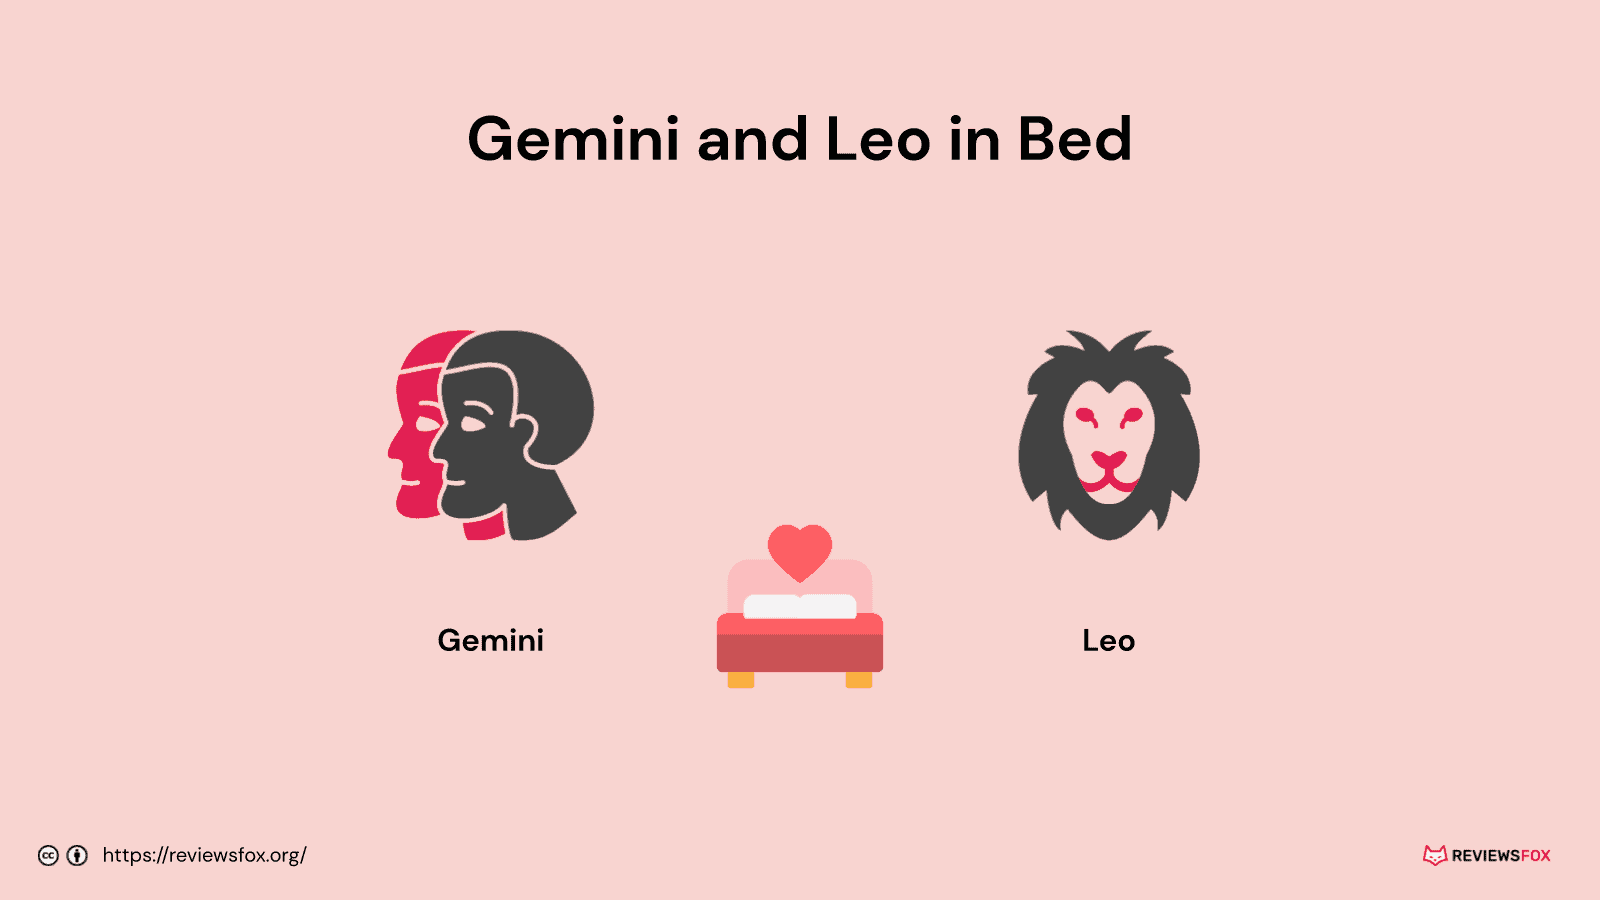 Gemini and Leo in bed